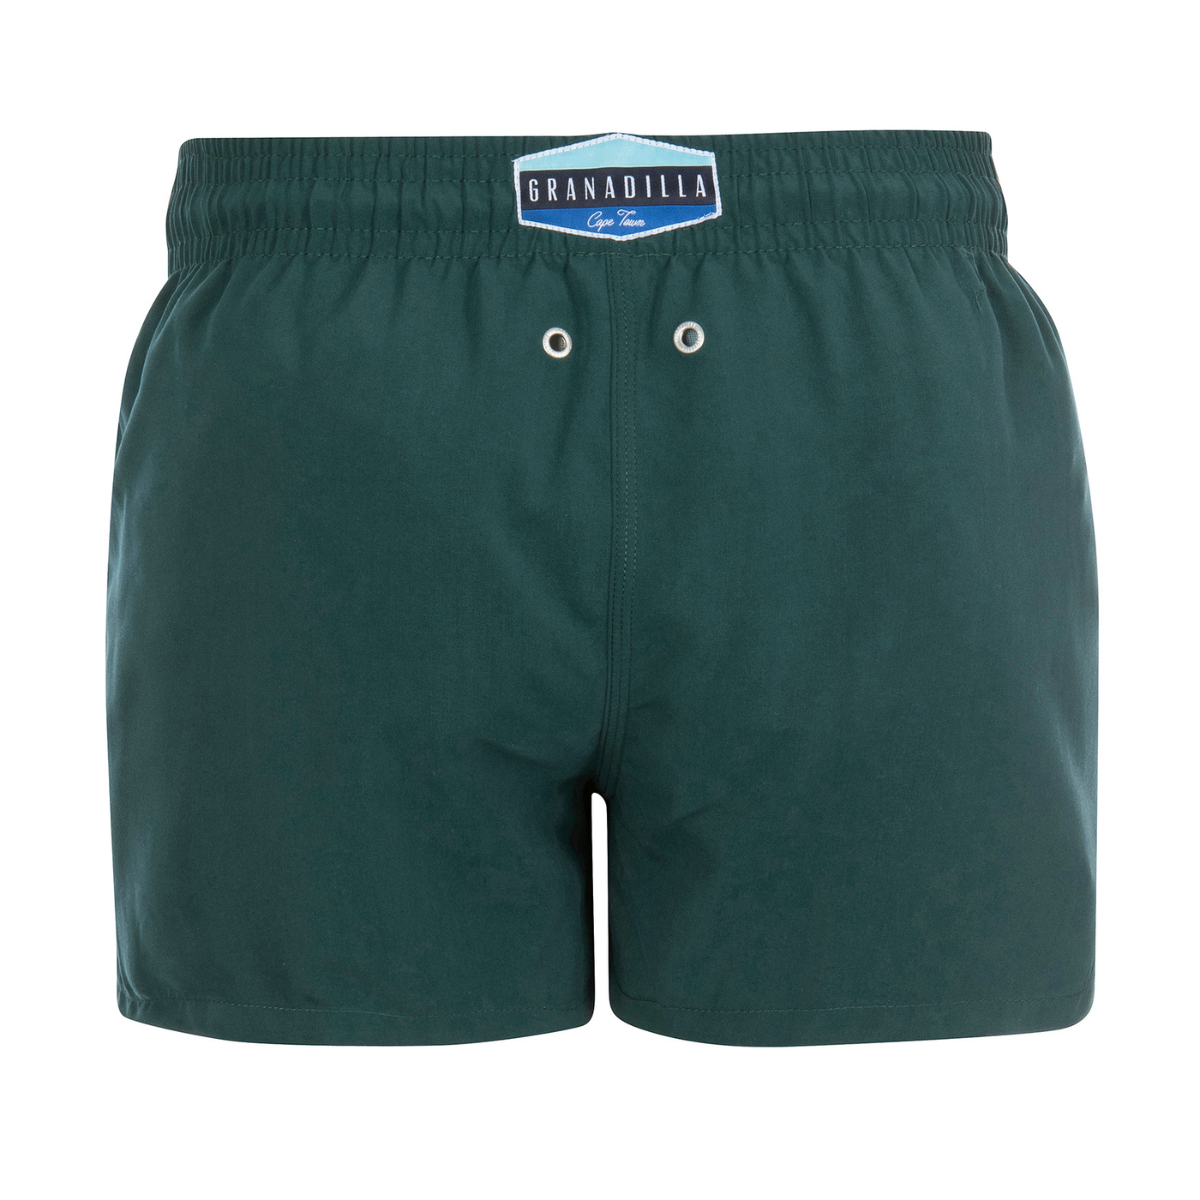 Short Shorts | Green